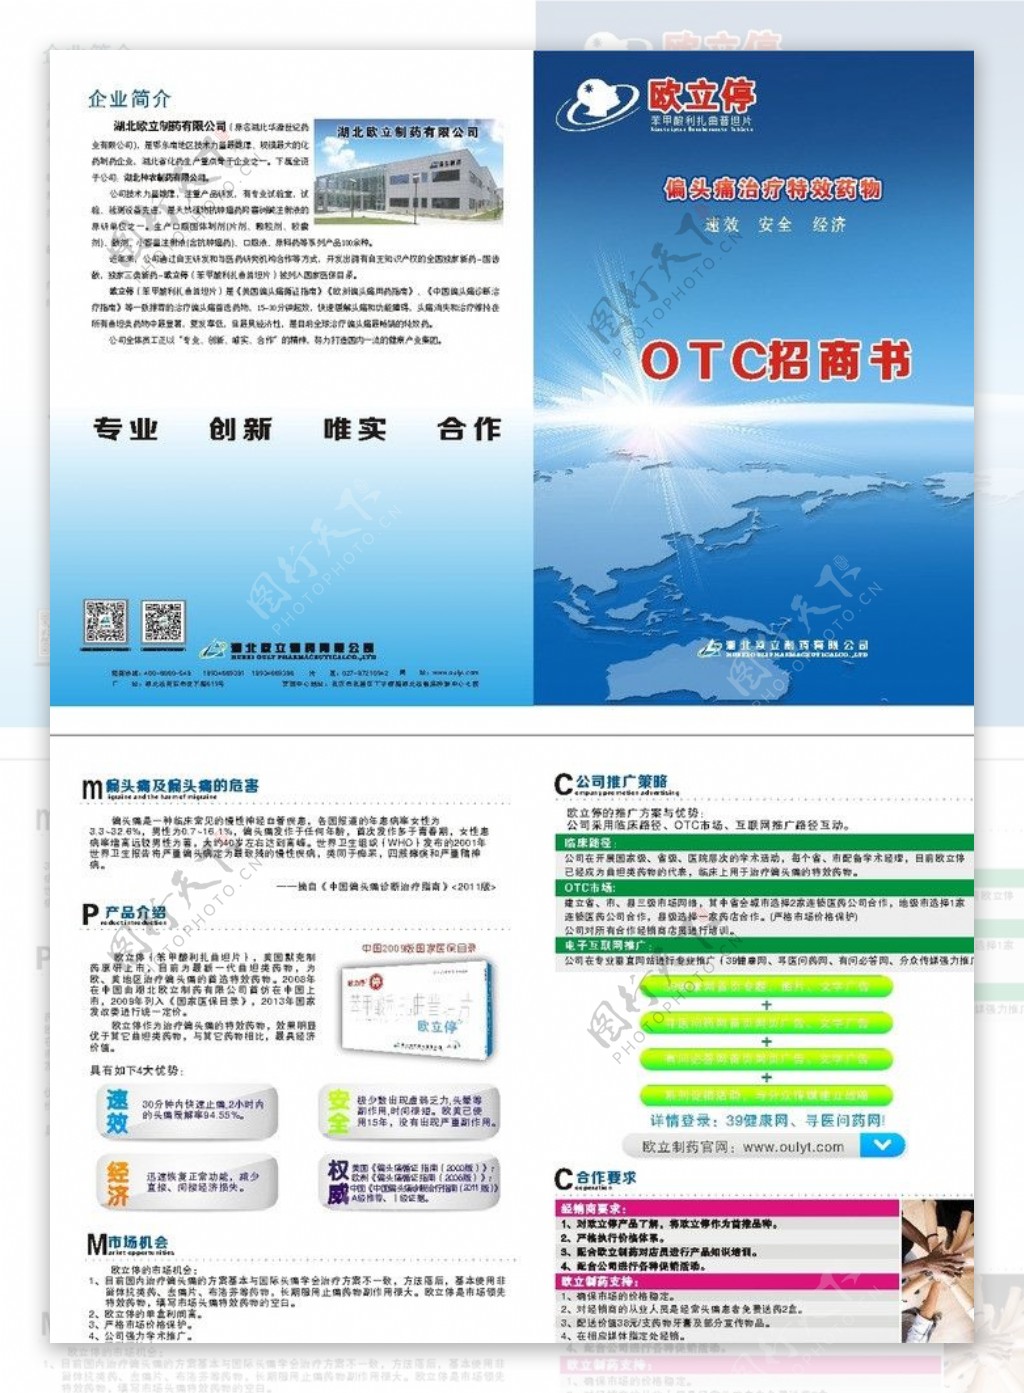 OTC招商手册图片